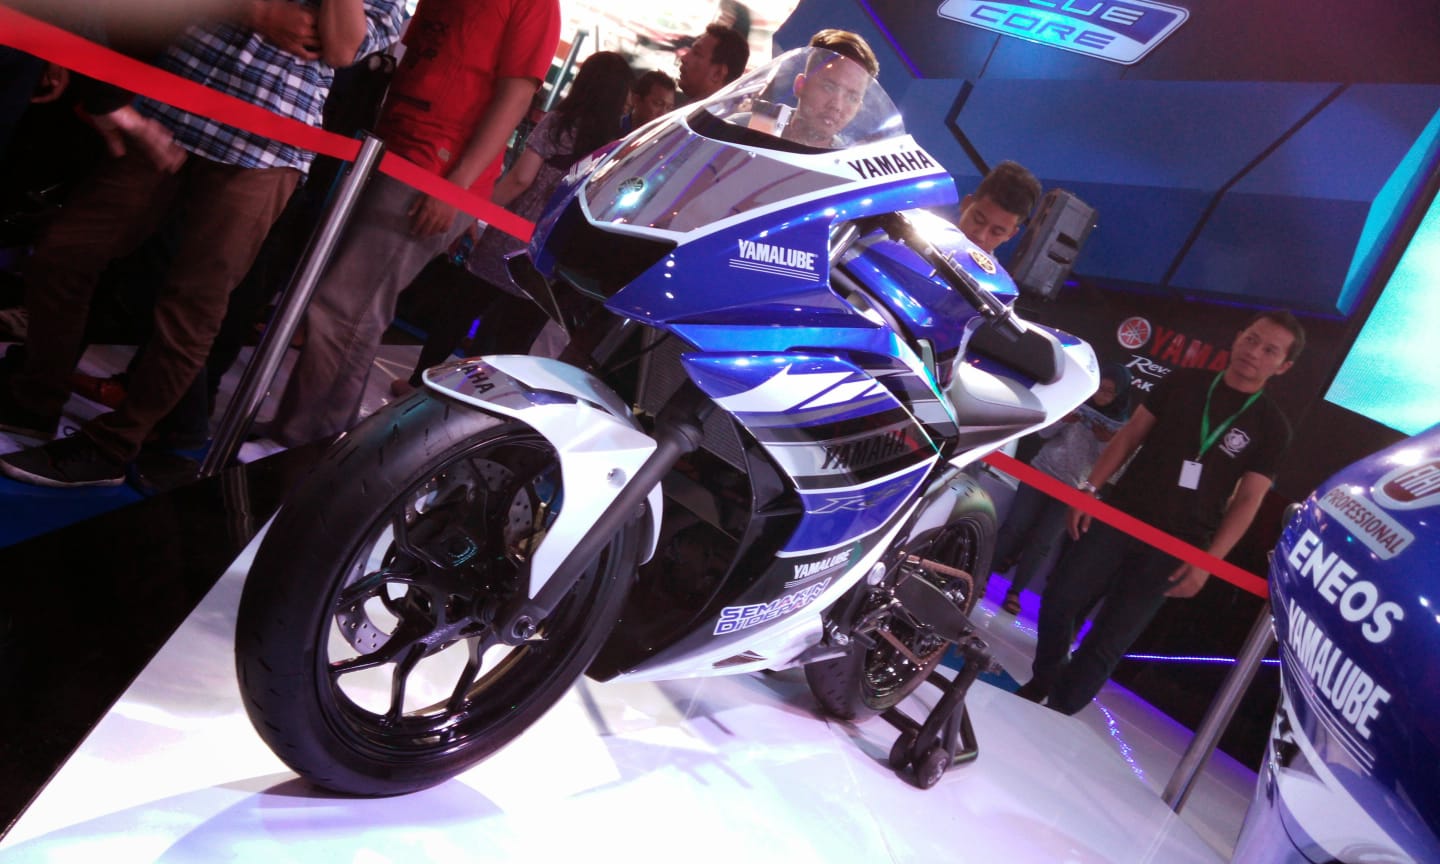 Yamaha R25 Concept Dikenalkan Lebih Dari 10 Tahun Silam, Disebut Mirip Versi Mini YZR-M1 